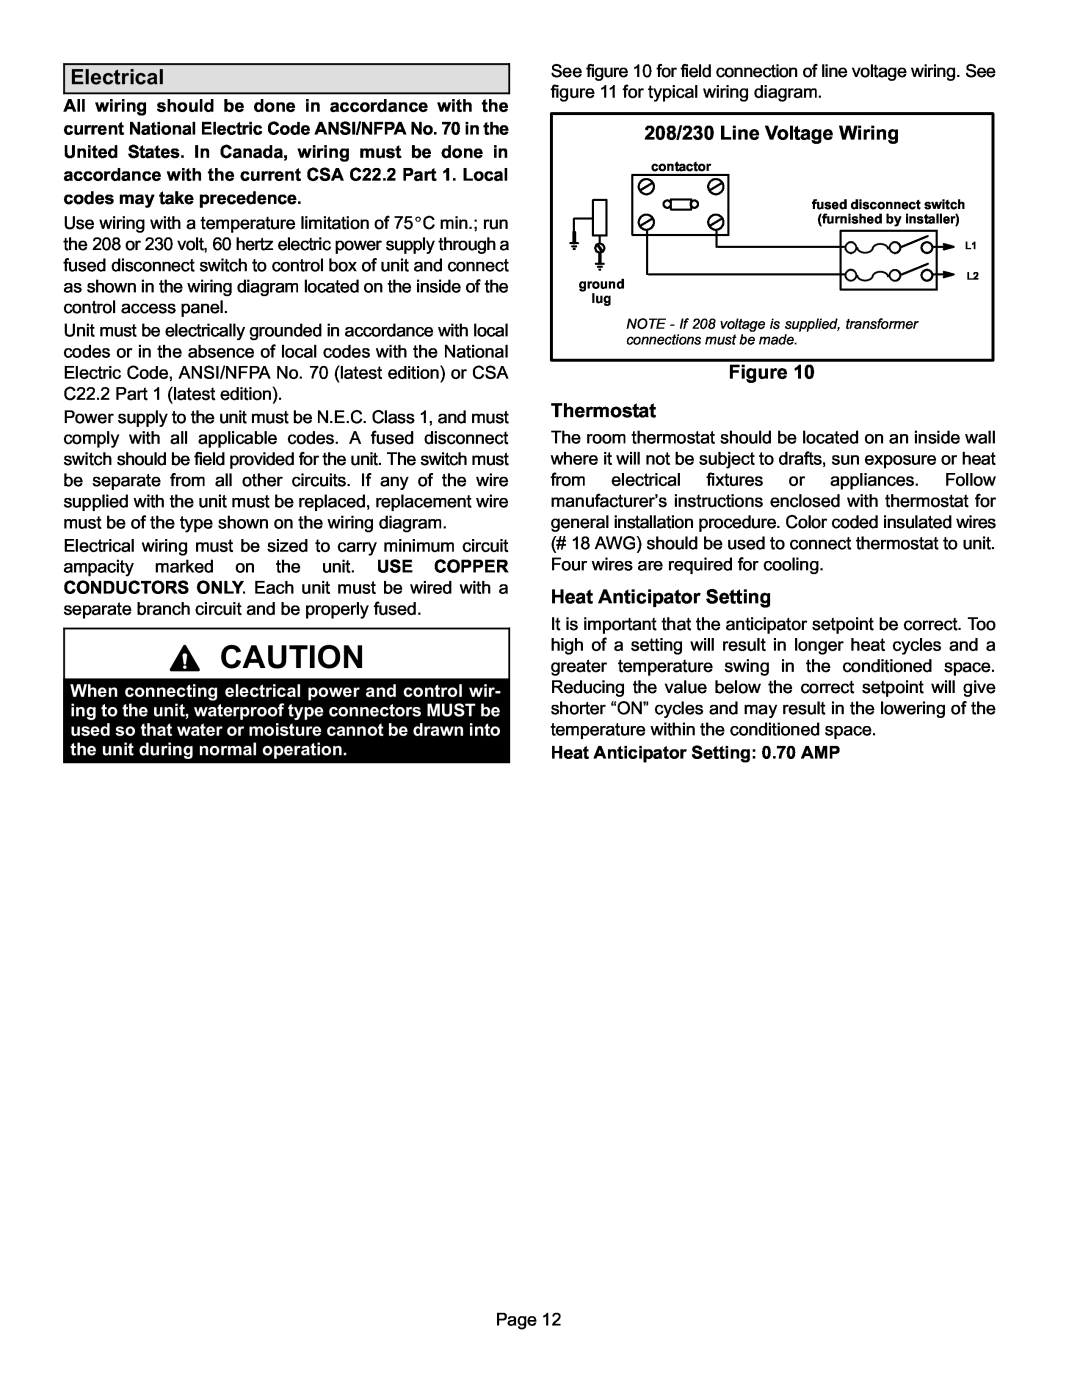 Lennox International Inc 15GCSX Electrical, 208/230 Line Voltage Wiring, Figure Thermostat, Heat Anticipator Setting 